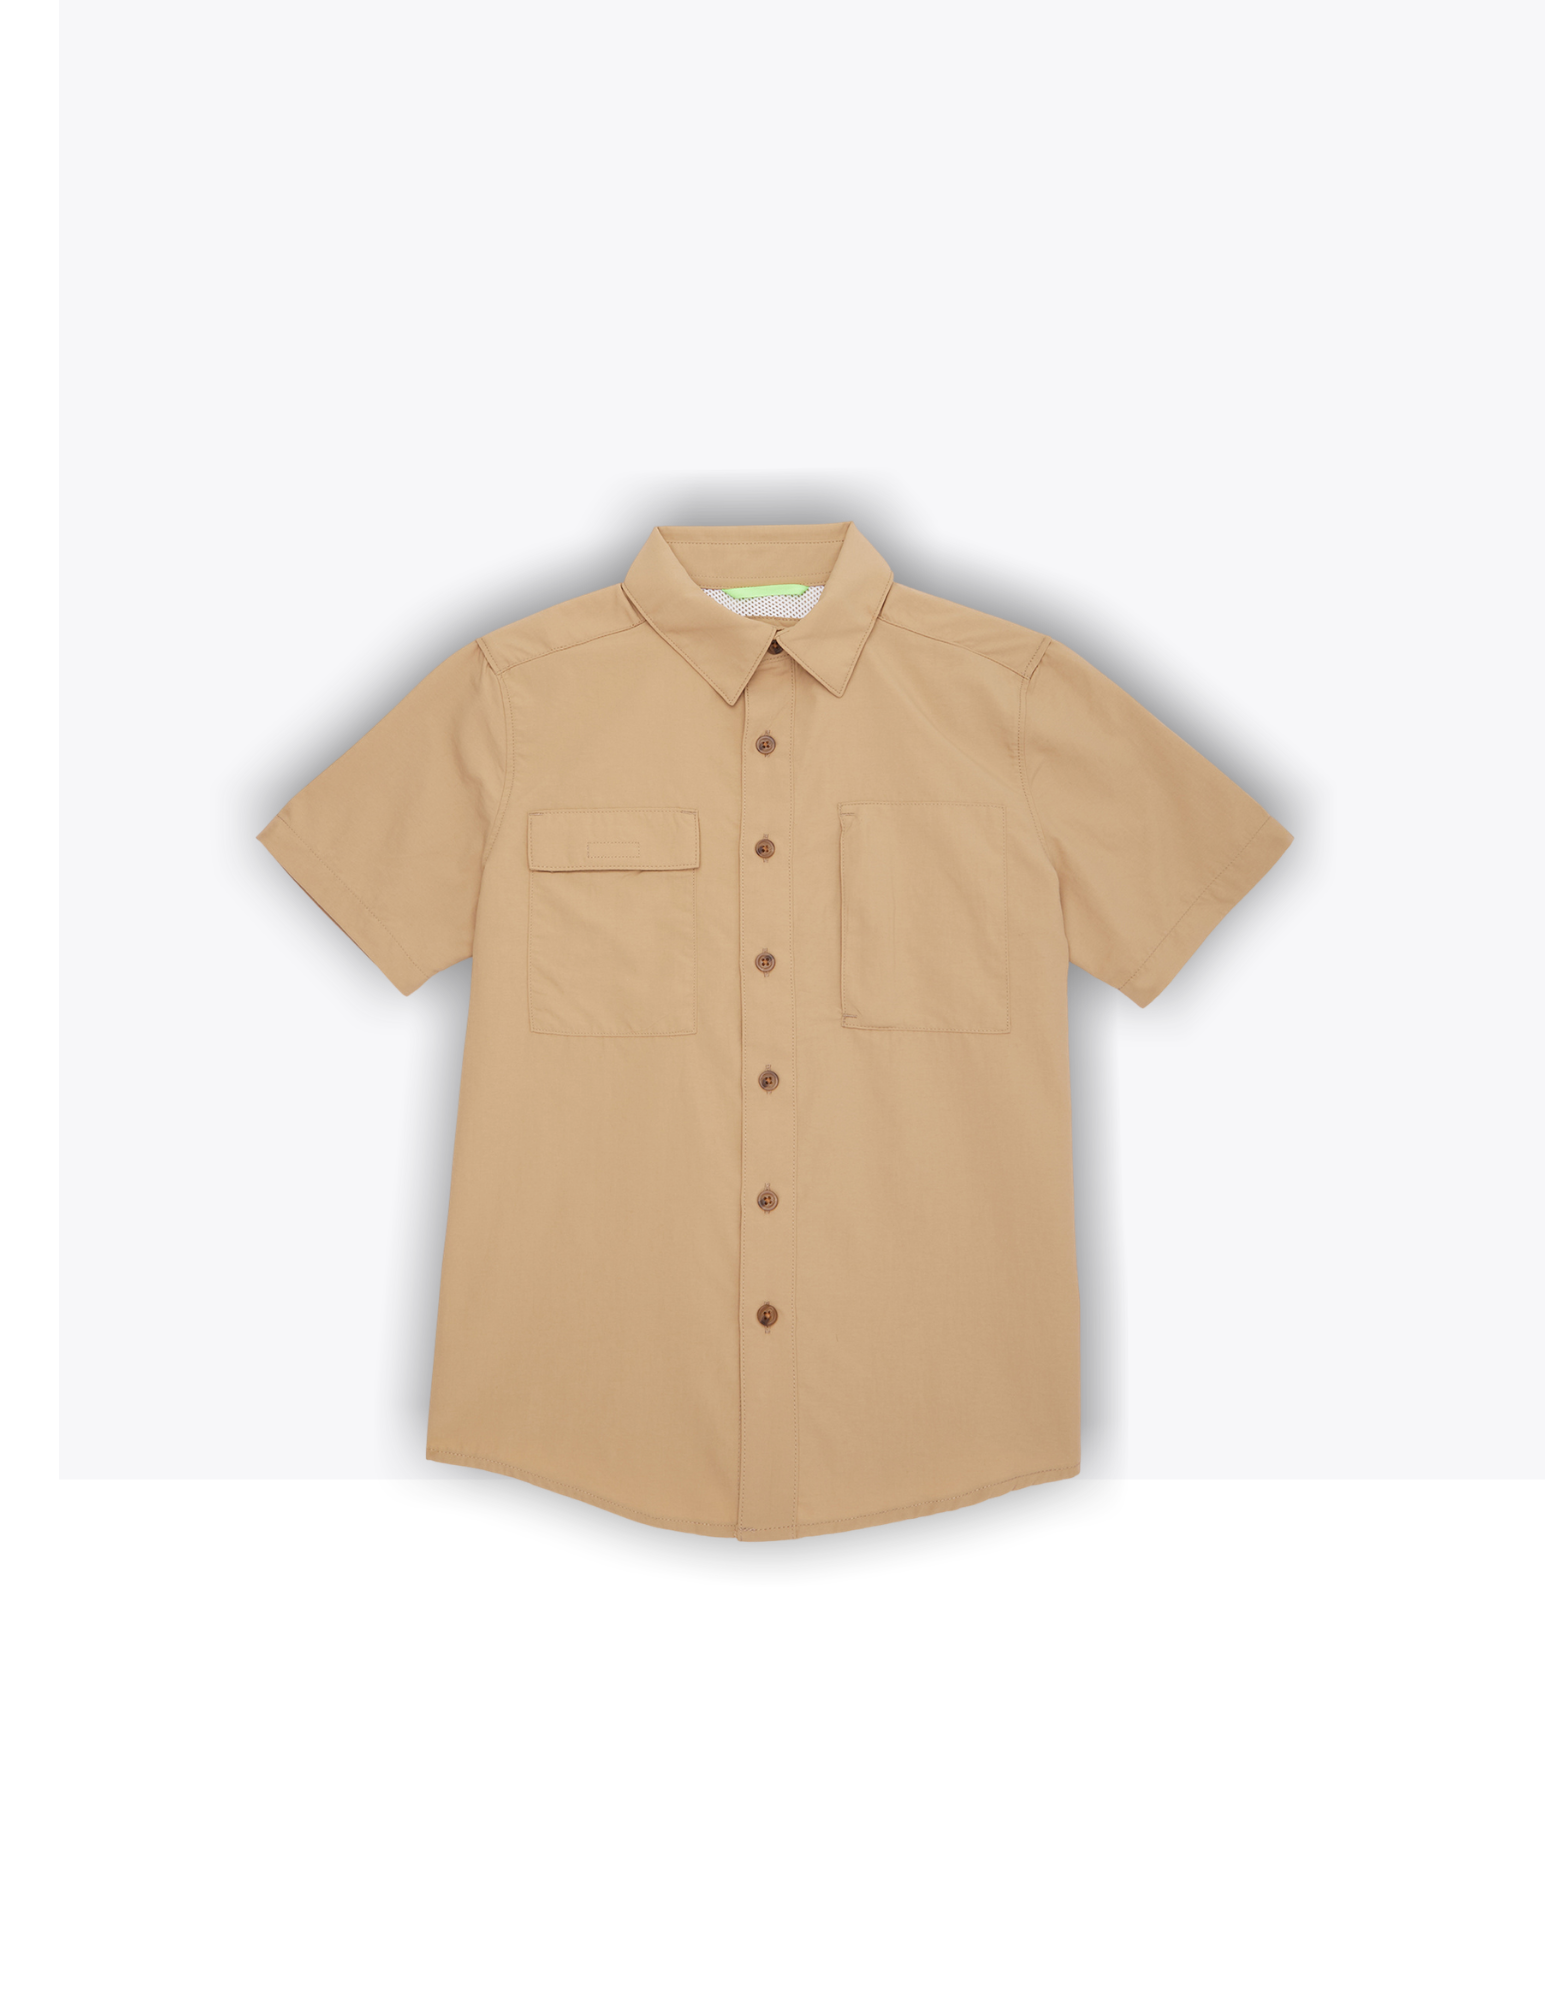 Shirt - Habitat Scouts Uniform — Habitat Schoolhouse